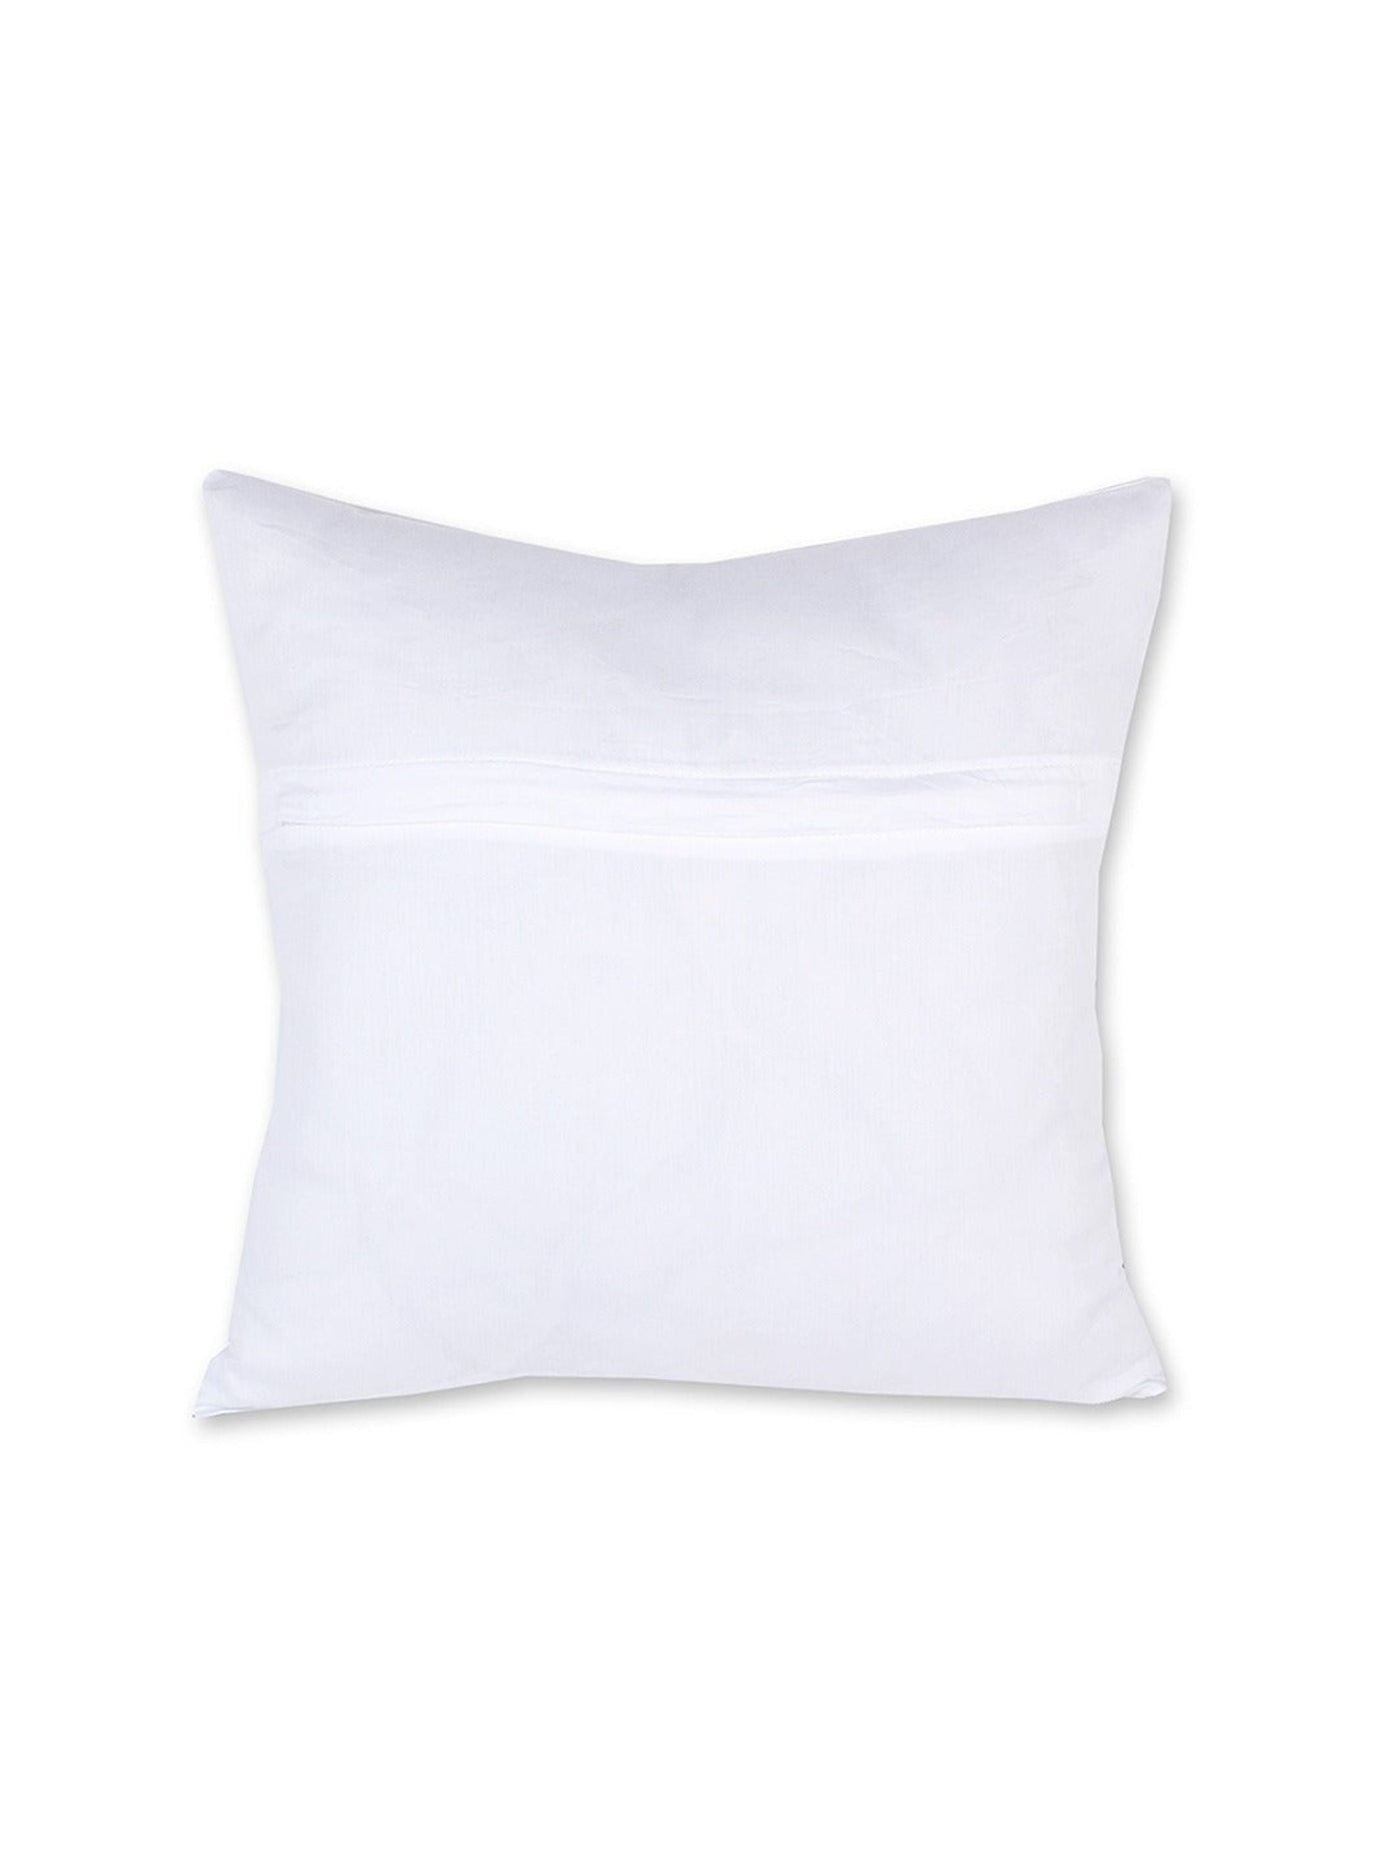 2 Cushion Covers - 2 s-8903773001231